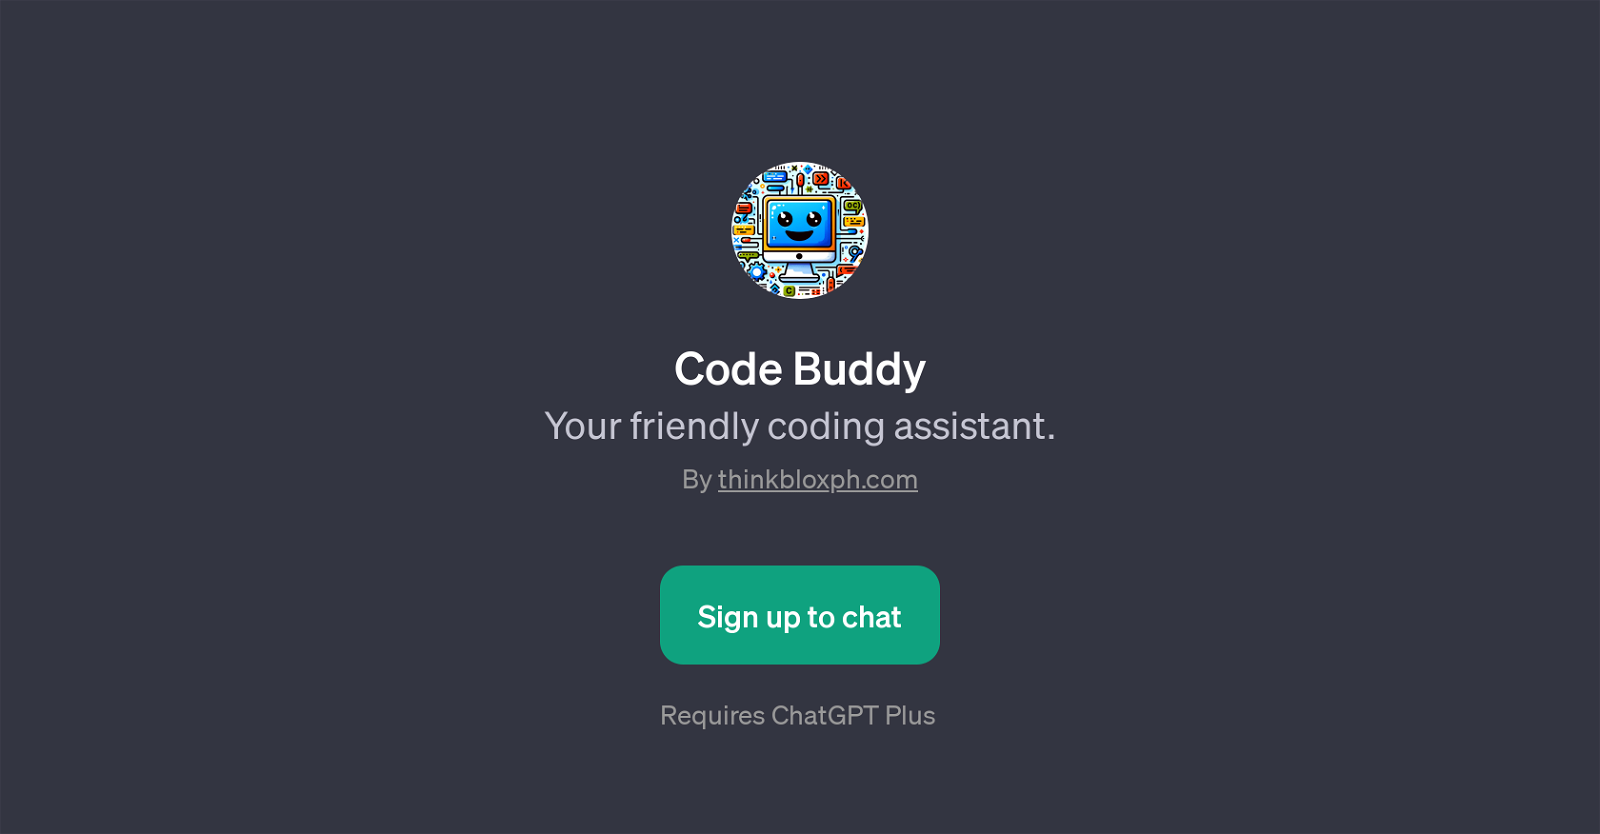 Code Buddy website